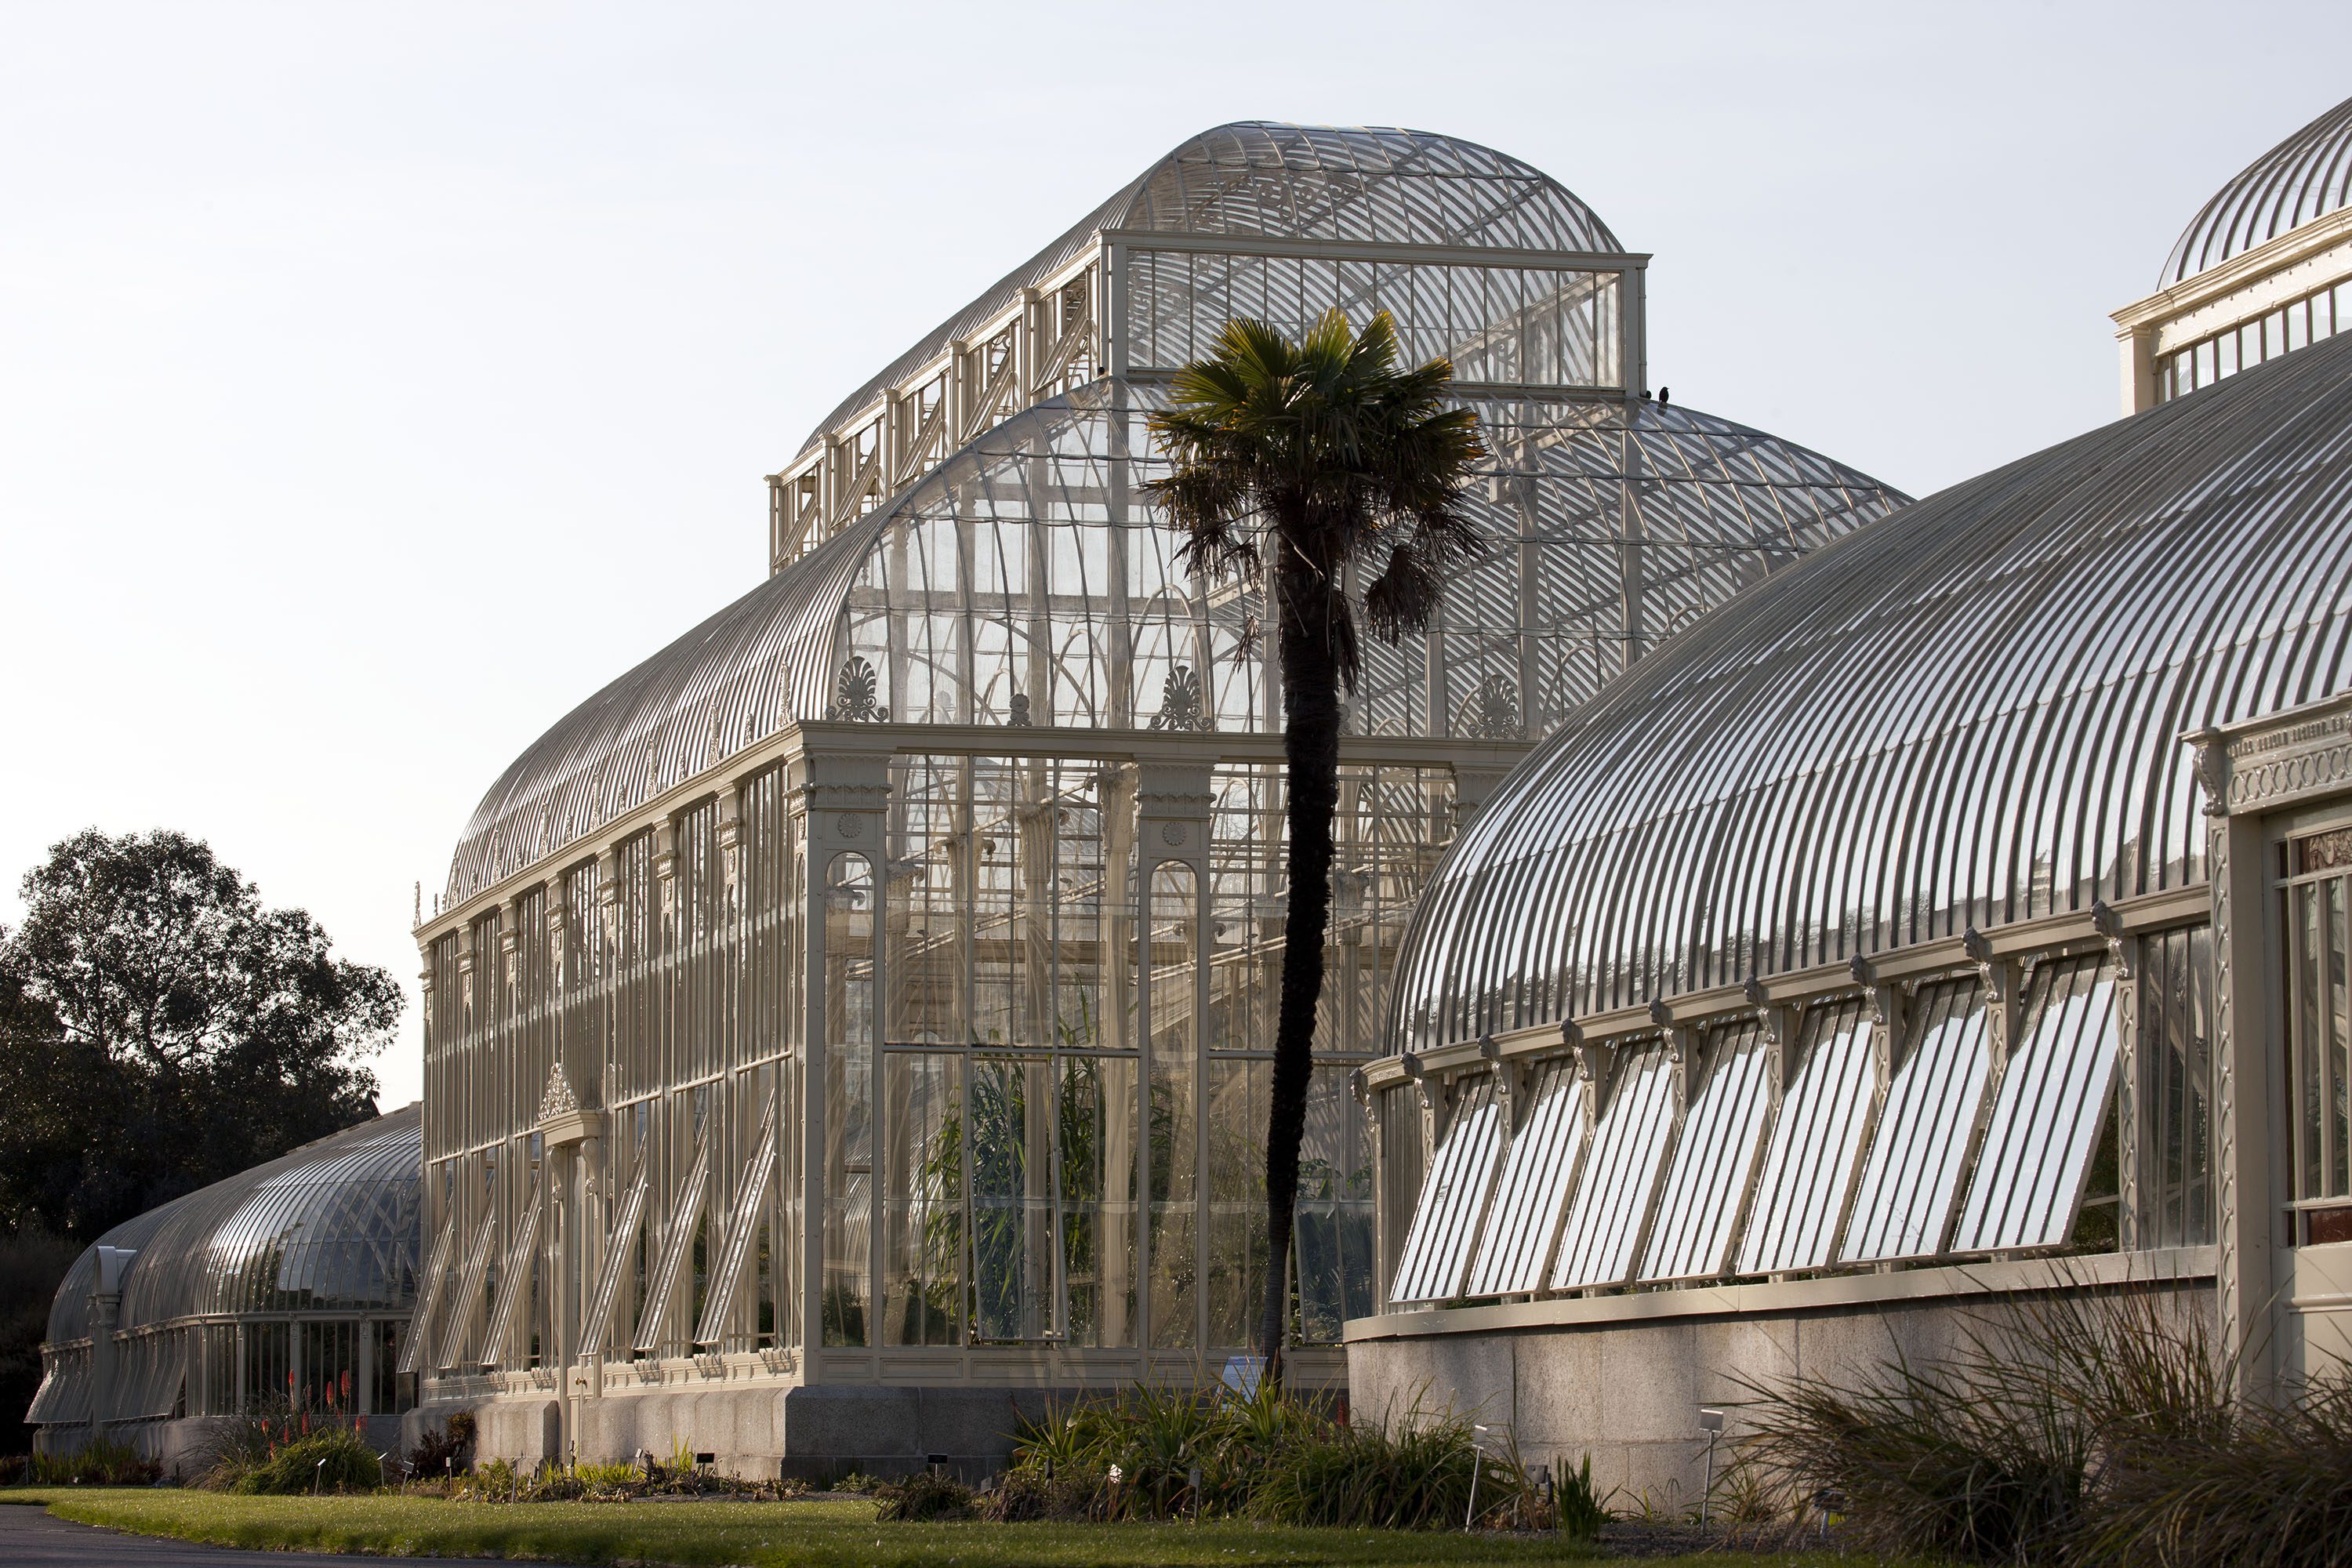 The curvilinear range of glasshouses at the National Botanic Gardens, Glasnevin, Dublin.